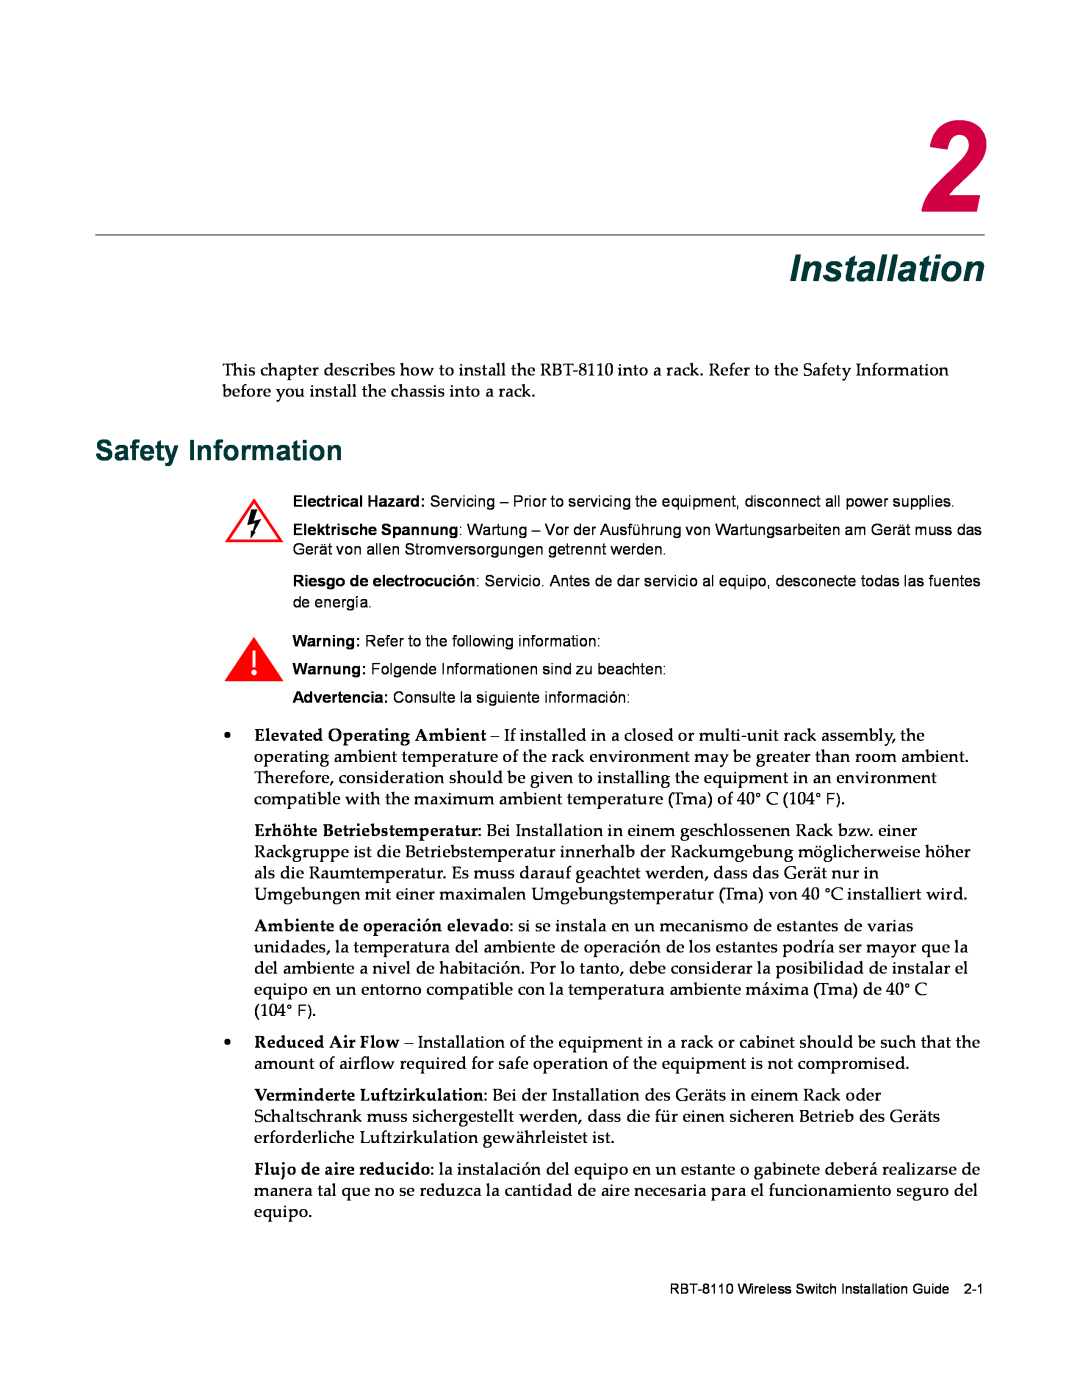 Enterasys Networks RBT-8110 manual Installation, Safety Information 